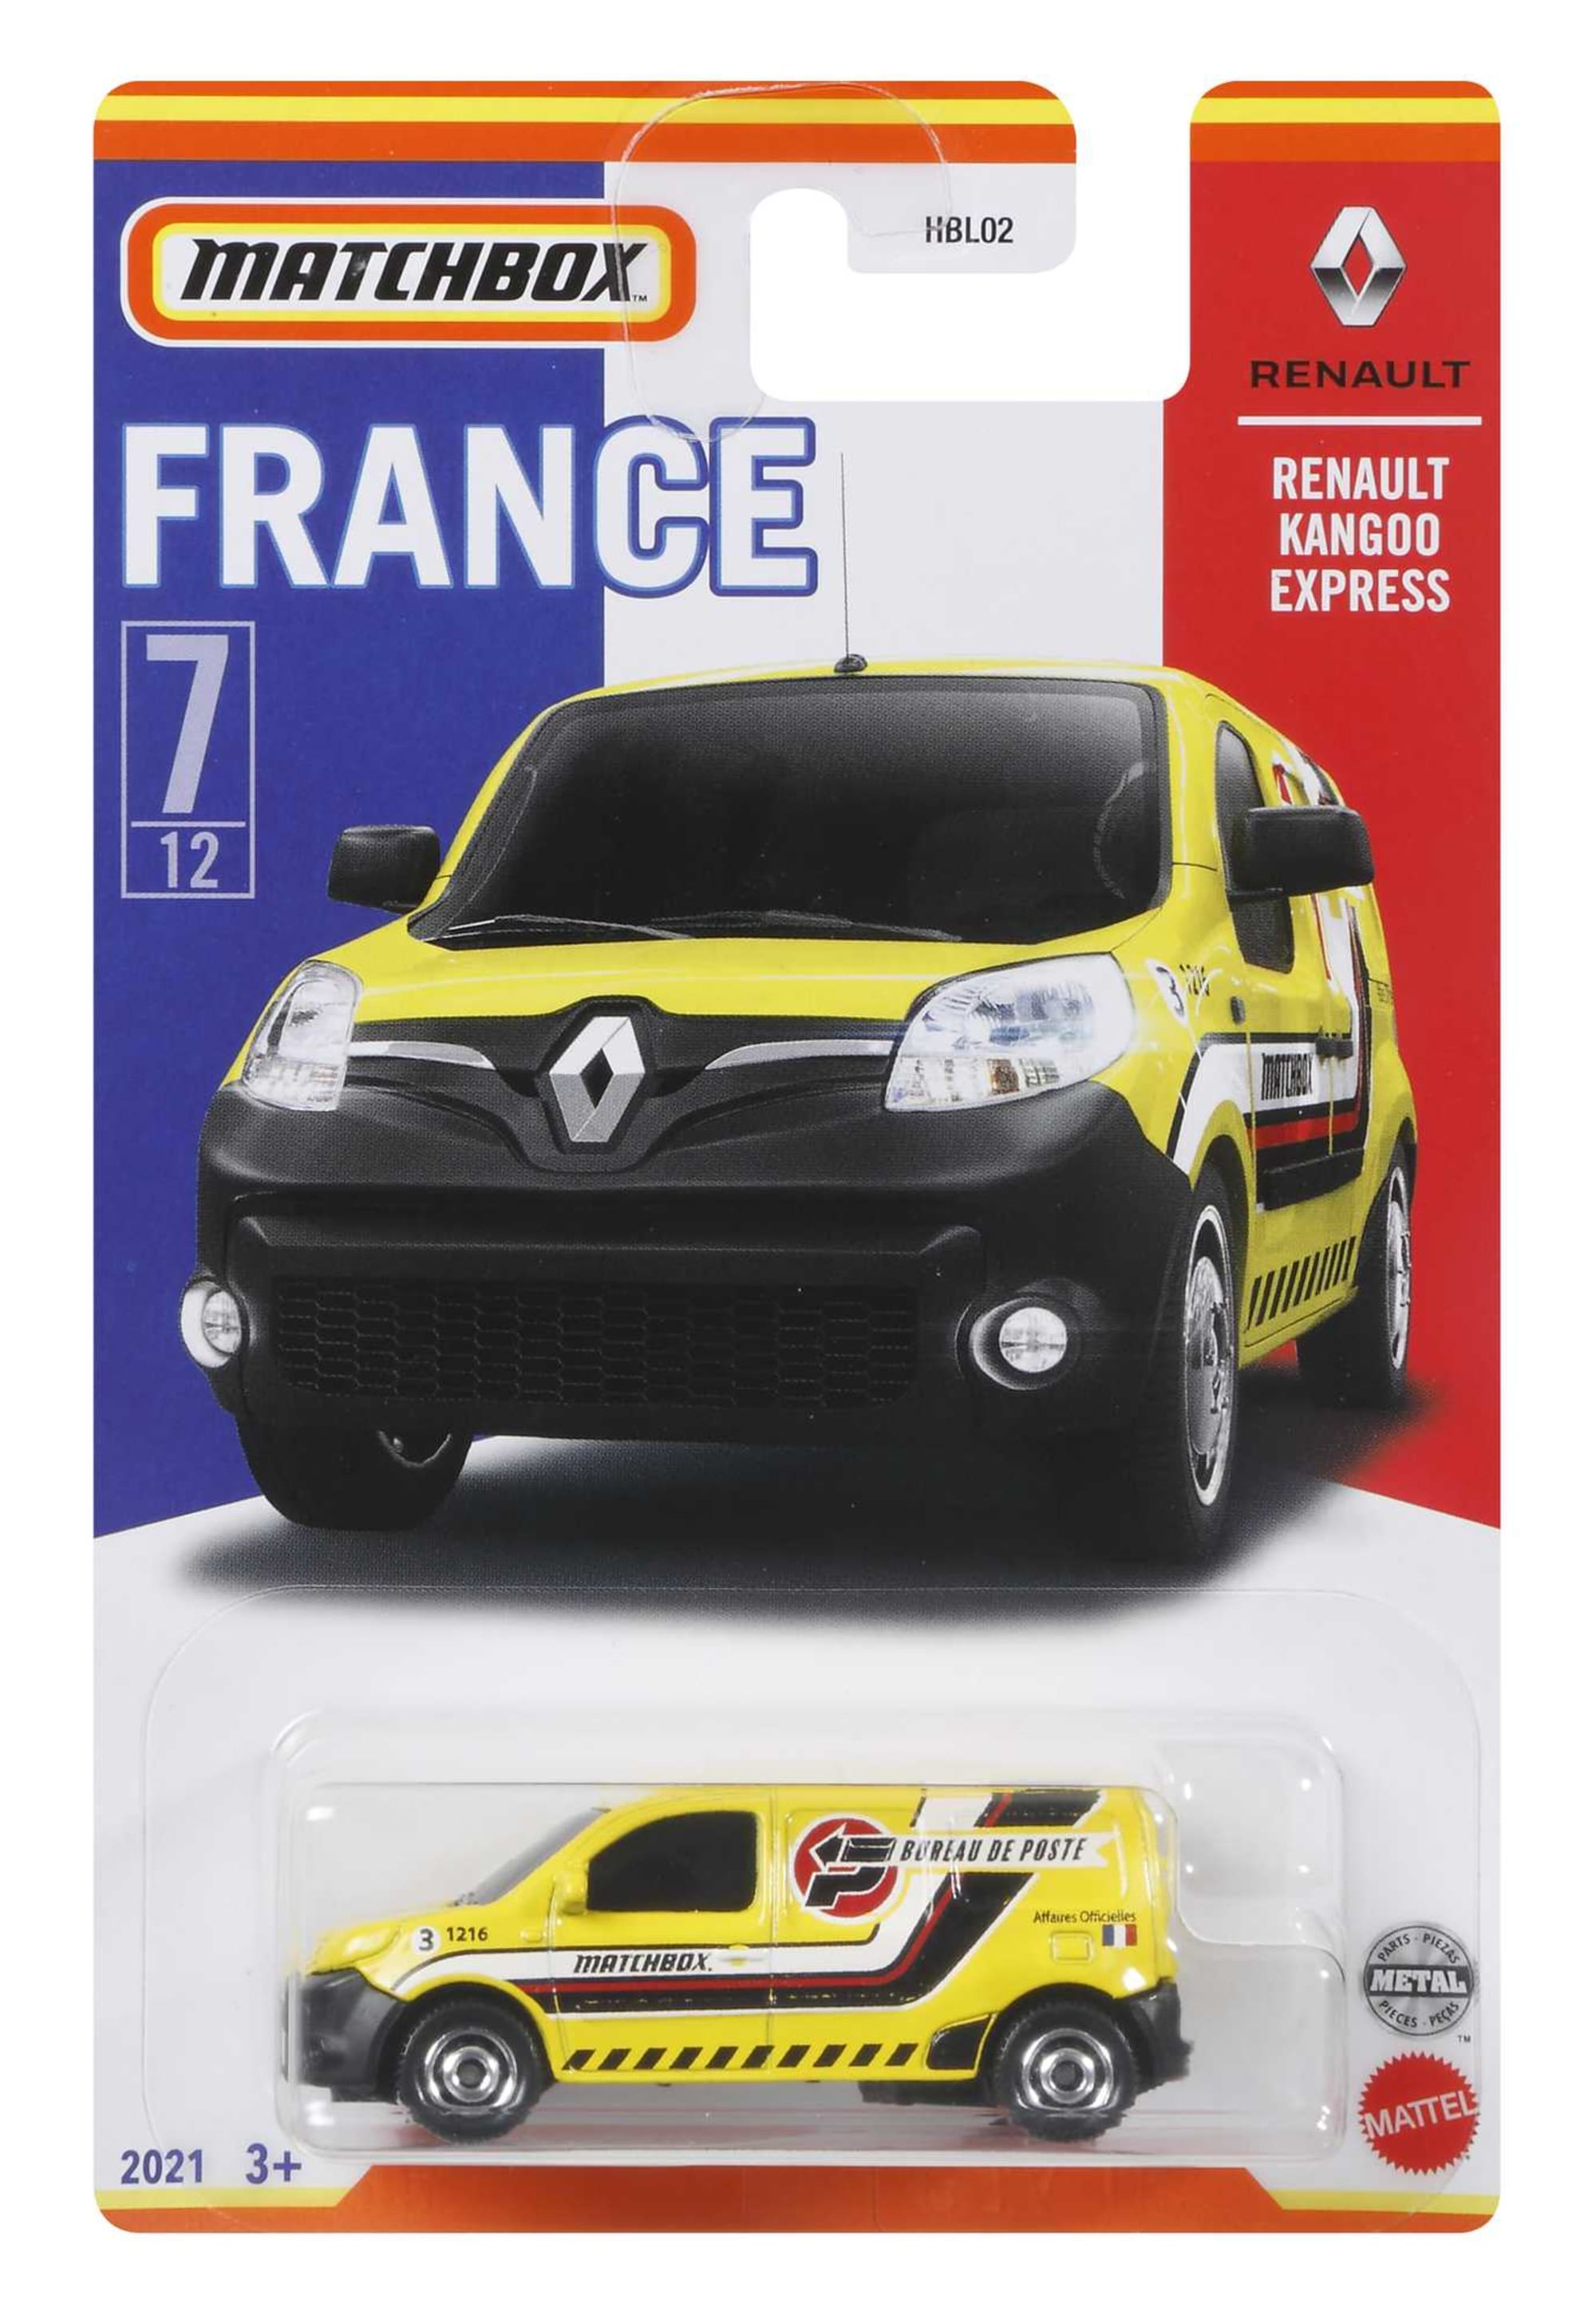 Les voitures Matchbox arrivent en France ! –